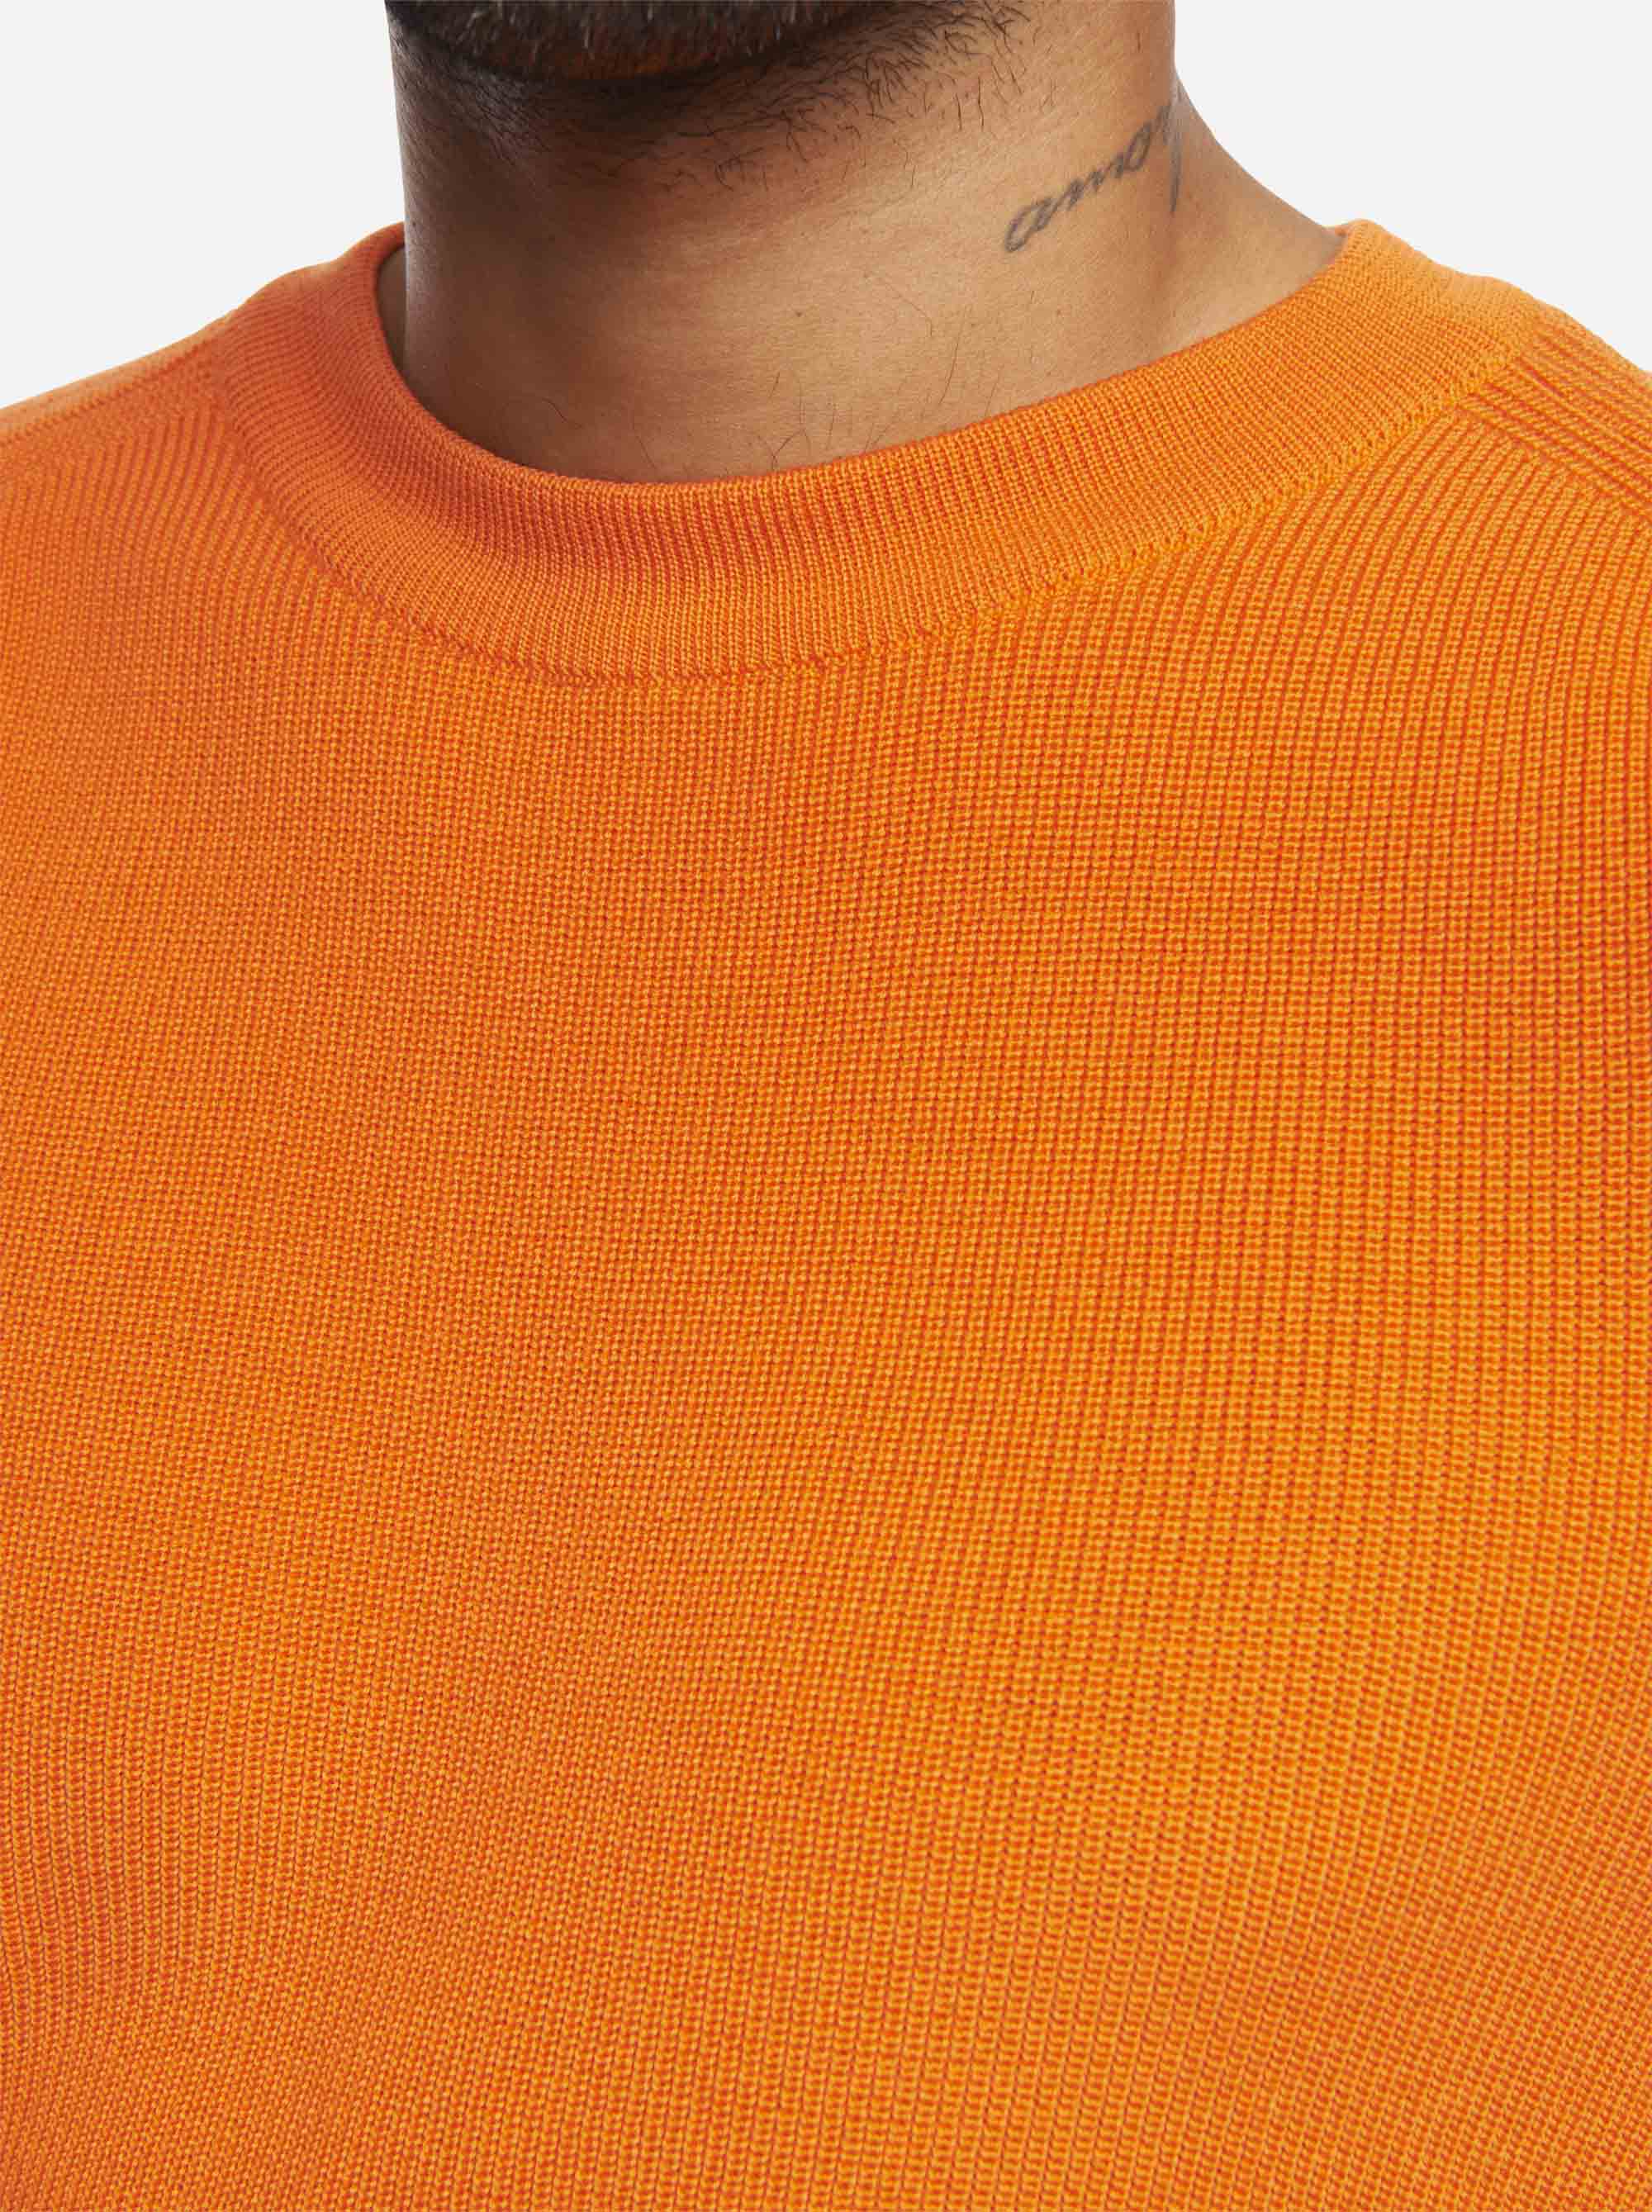 Teym - The Merino Sweater - Crewneck - Men - Orange - 5